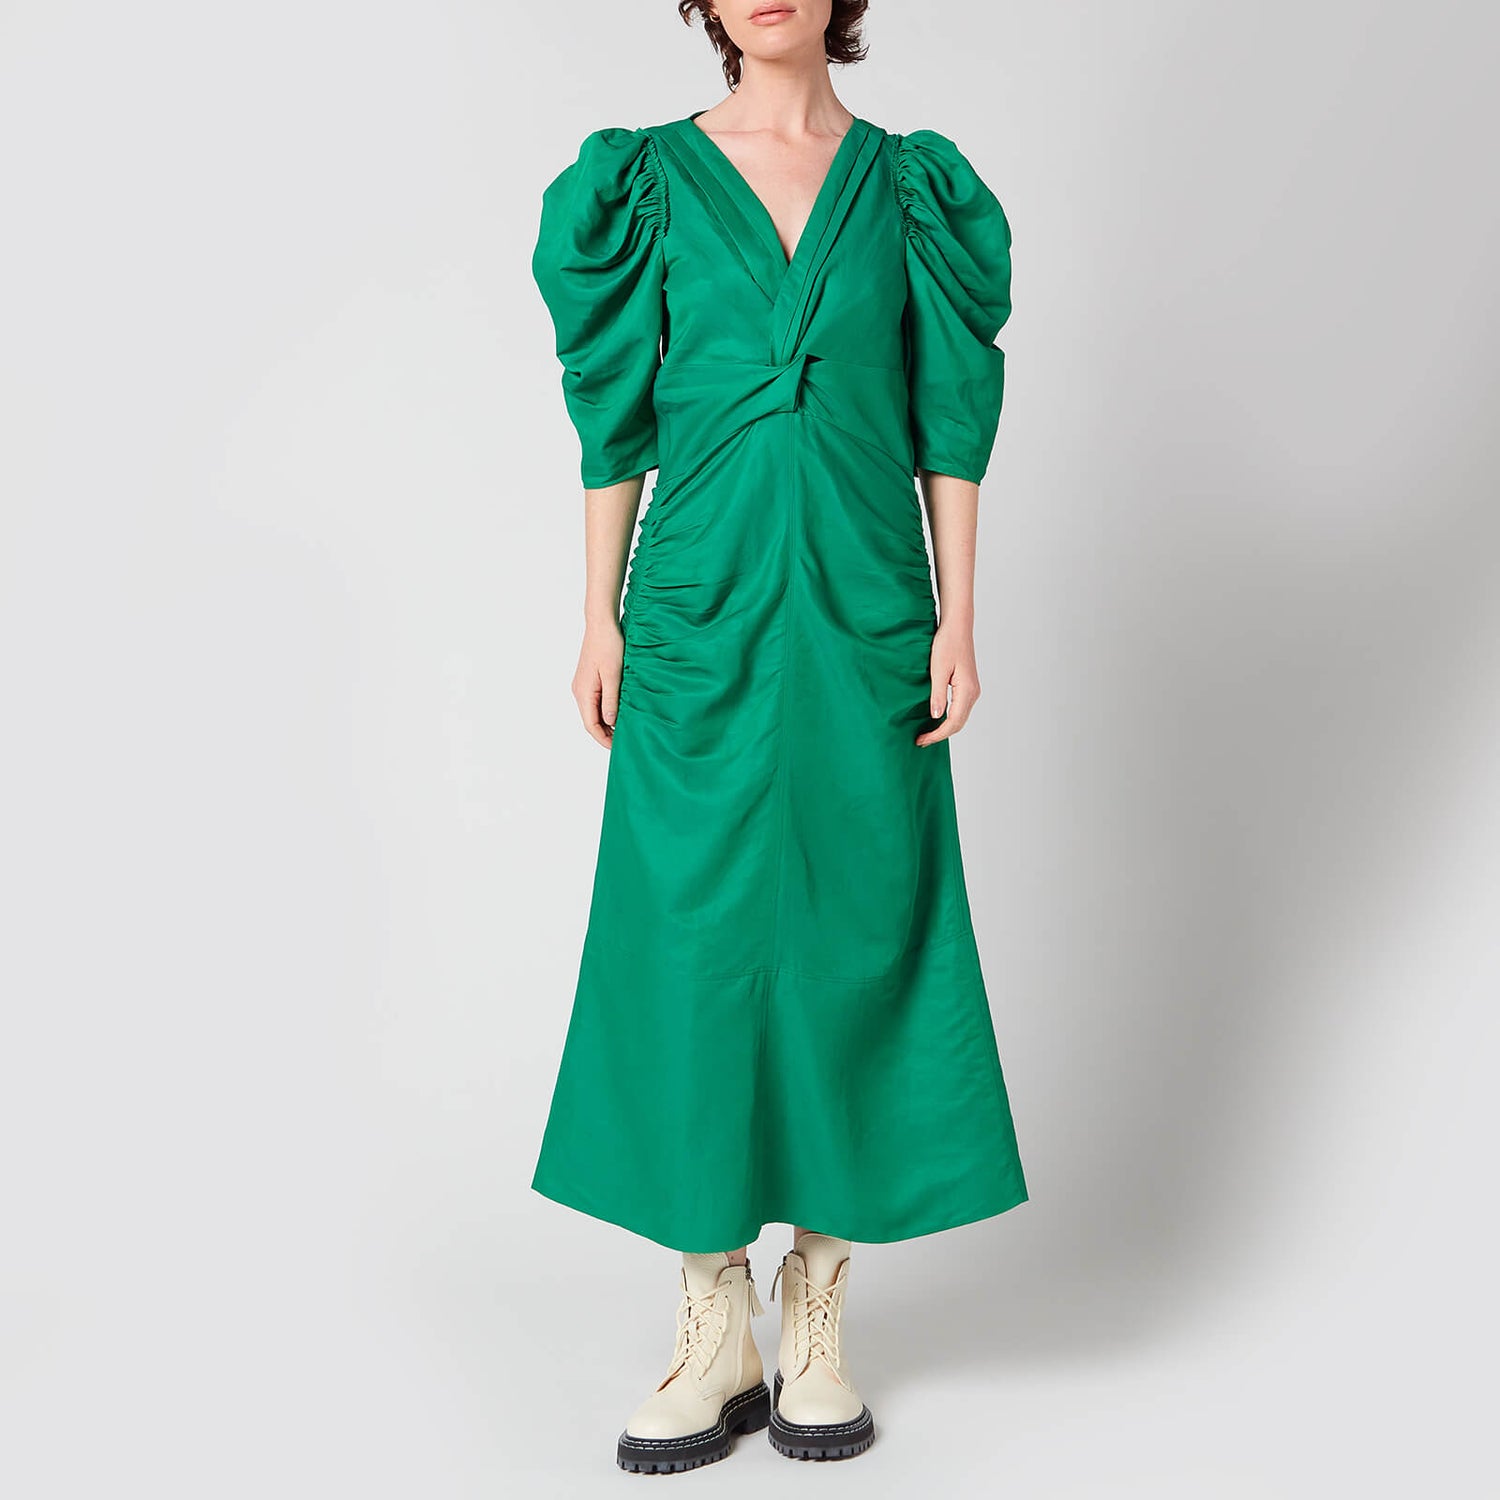 Proenza Schouler Women's Linen Viscose Shirred Sleeve Dress - Bright Green - US 8/UK 12